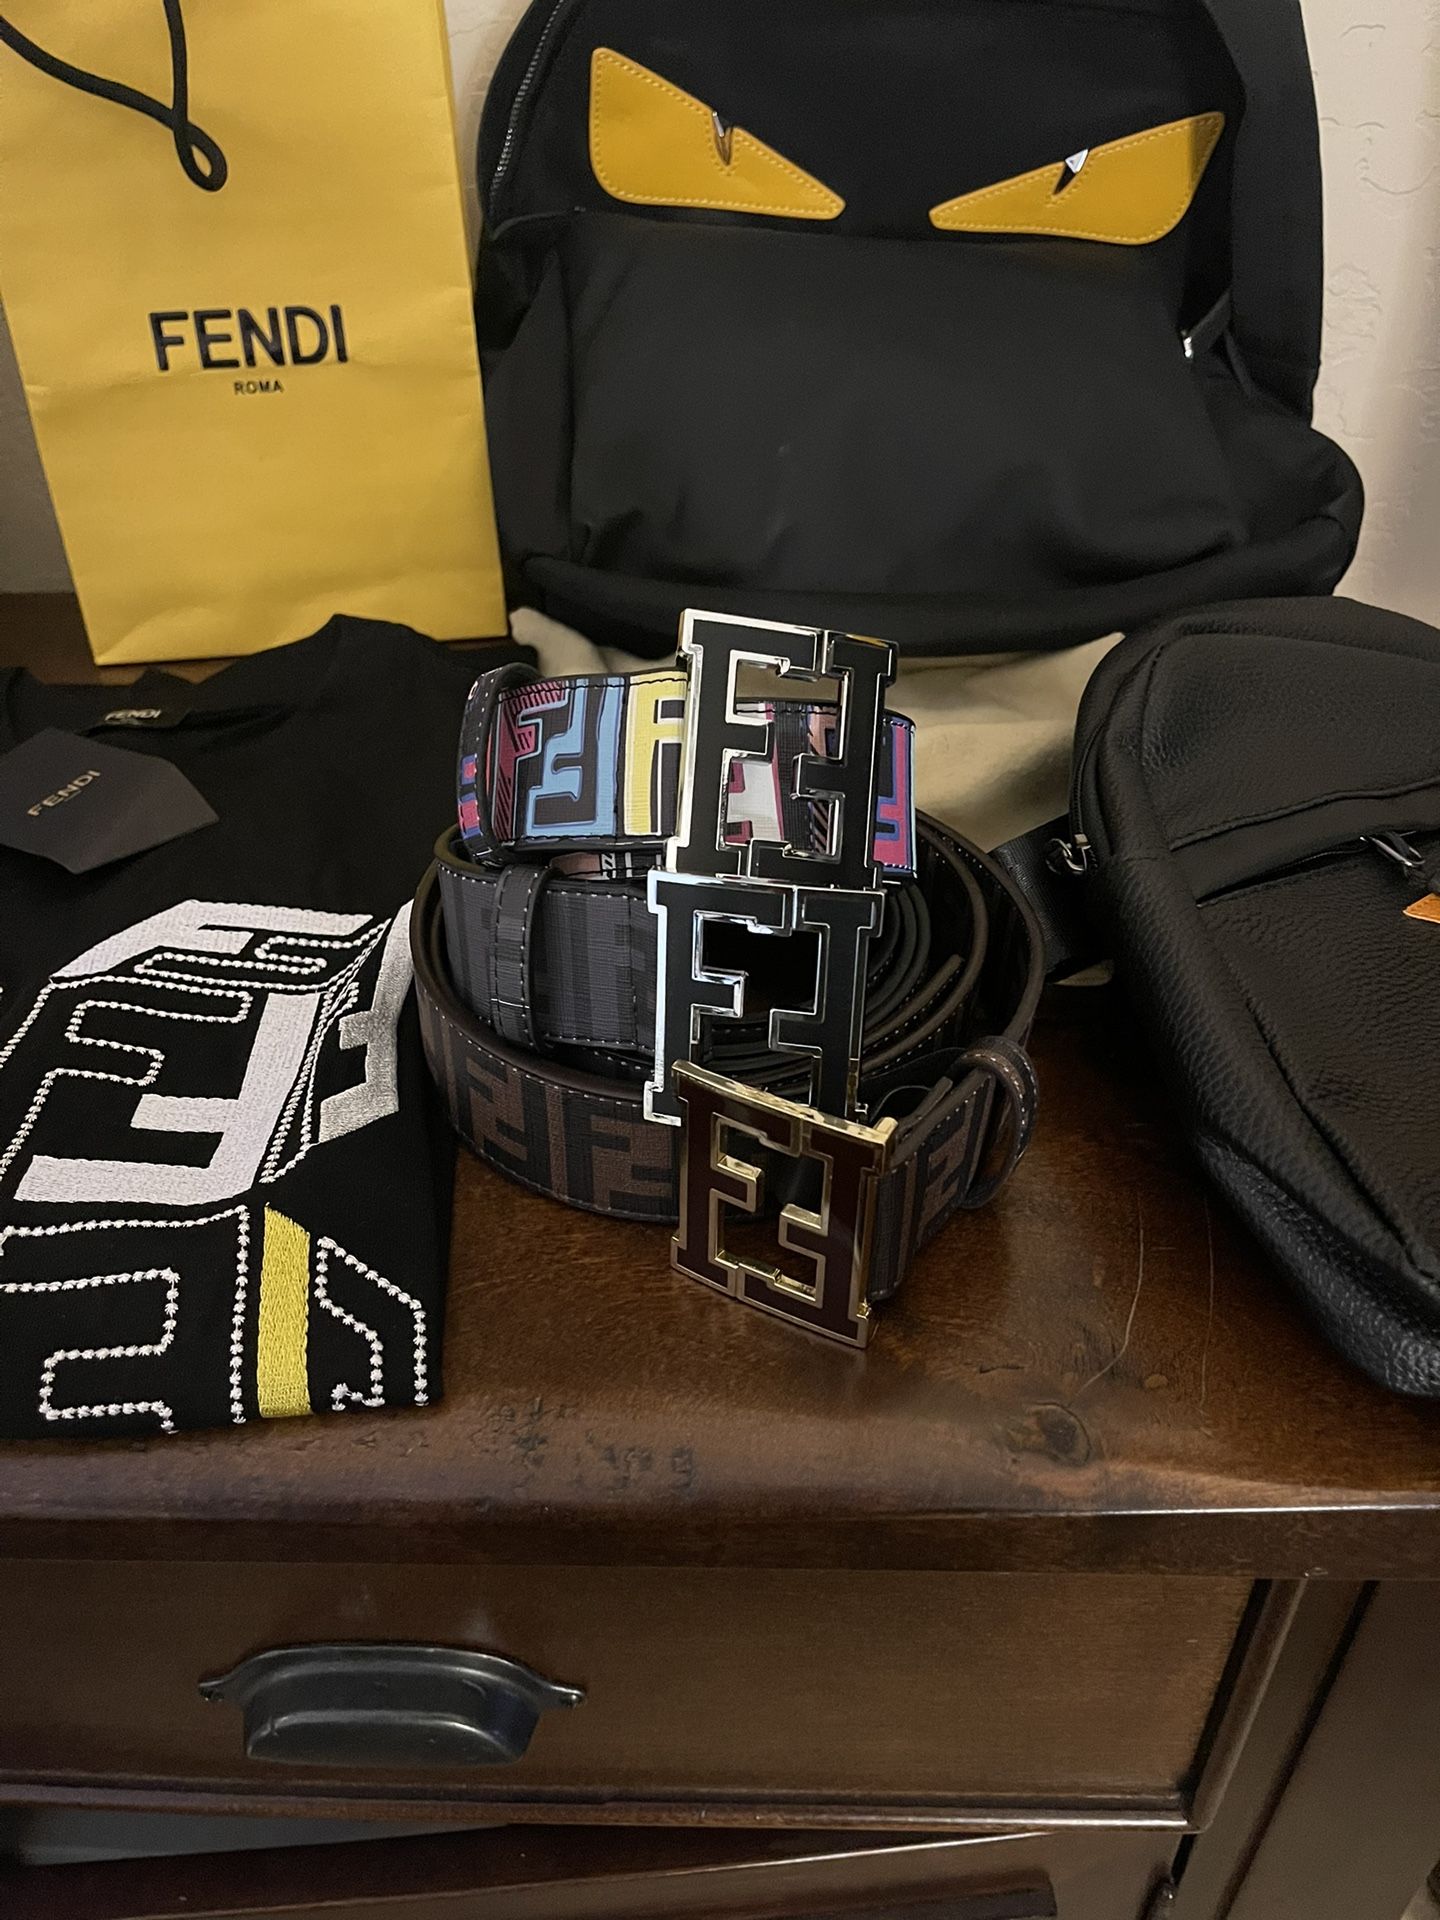 Fendi Collection Men’s Clothing, Women’s Braclet. Bags , Belts, & Shirts!